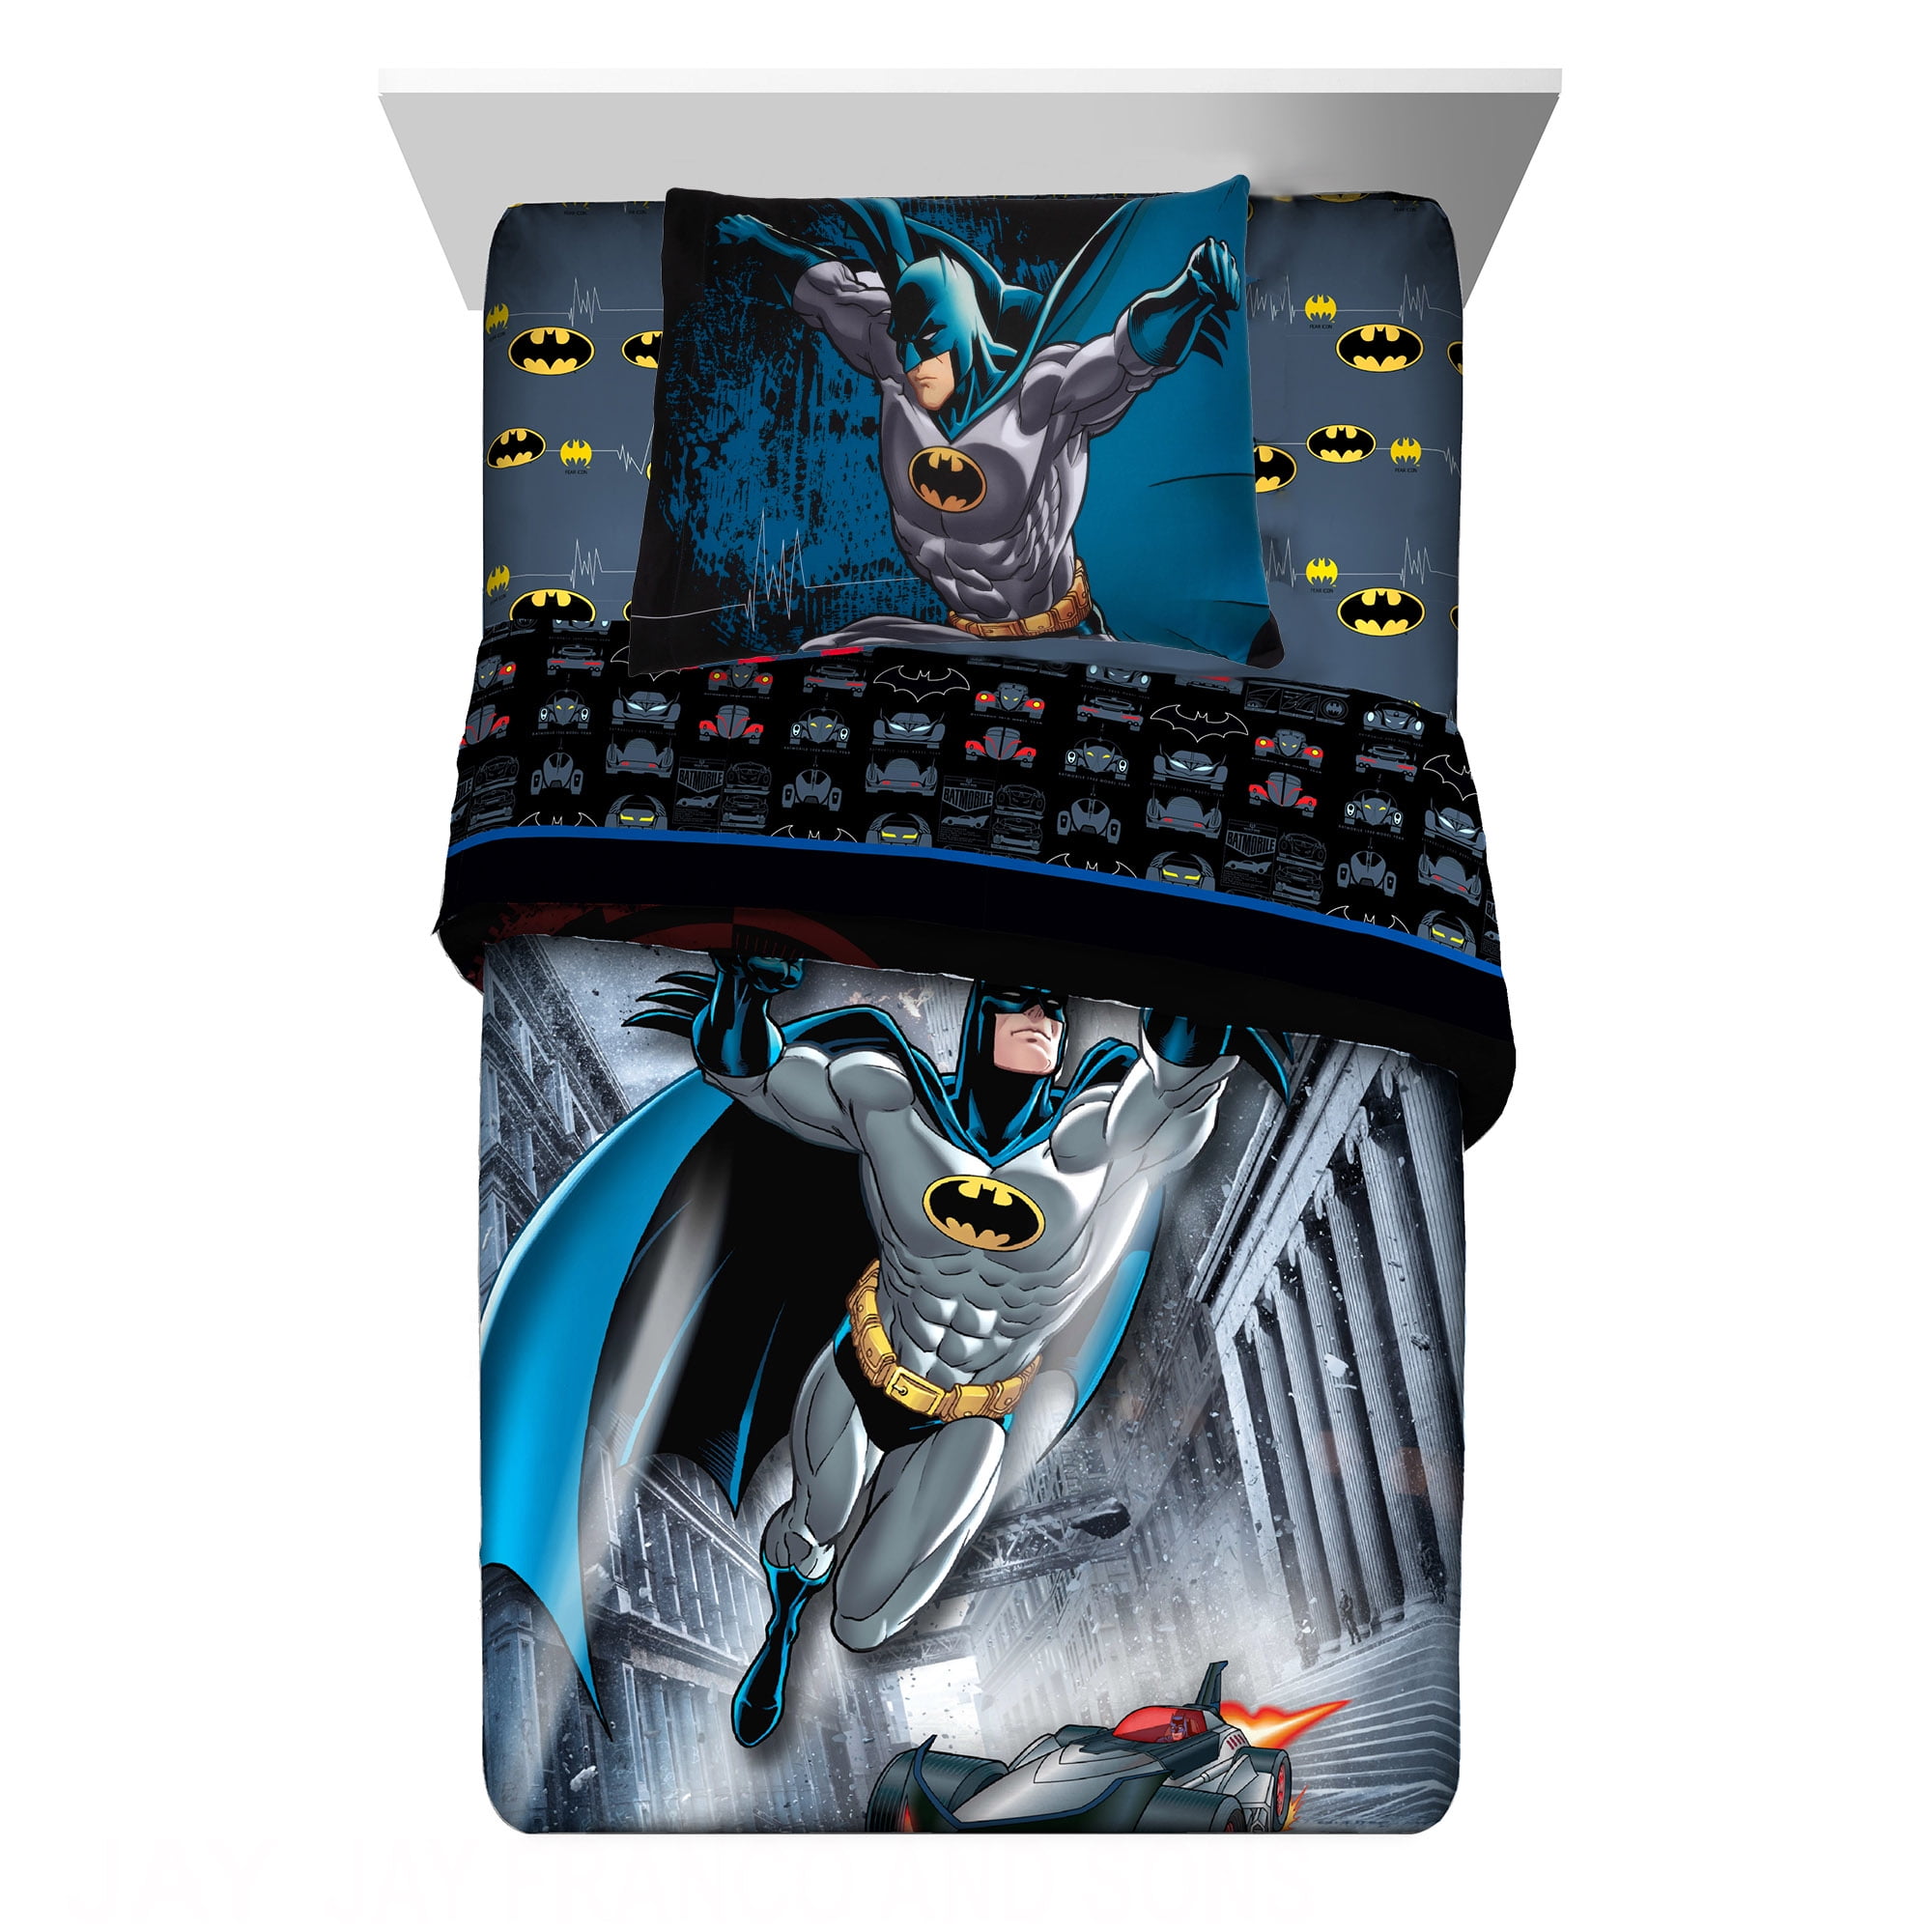 Kids Twin Size Batman Bedding Set 4 Piece Bedroom Comforter Sheets Pillowcase 